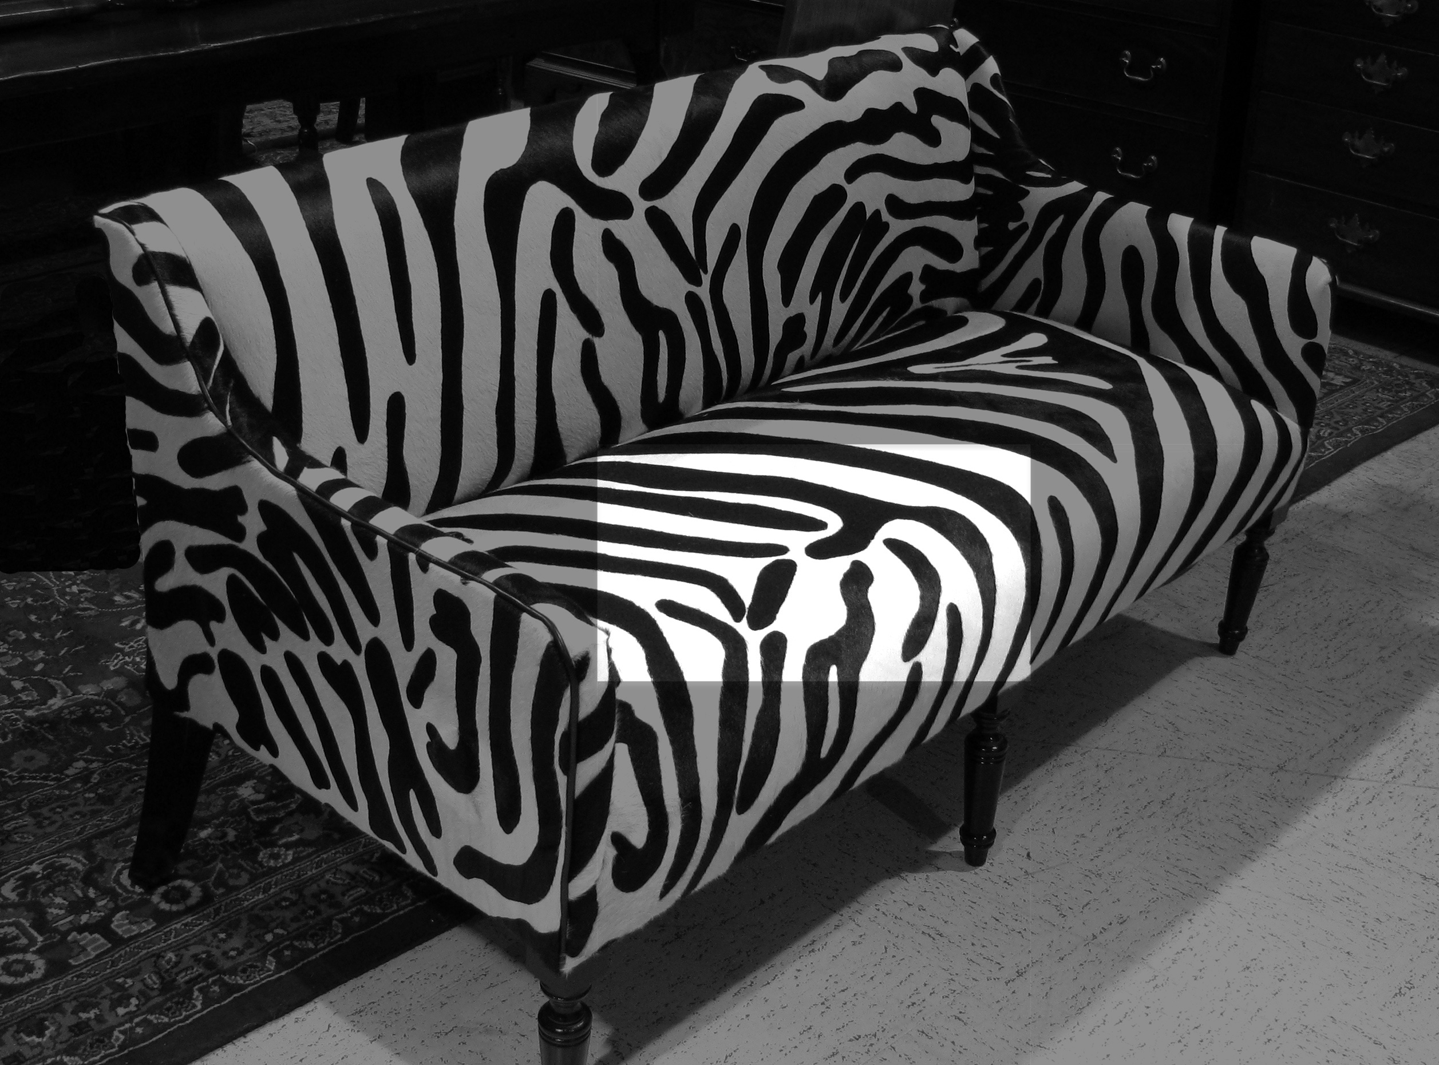 Zebra sofa by Glen Edelson (image source)